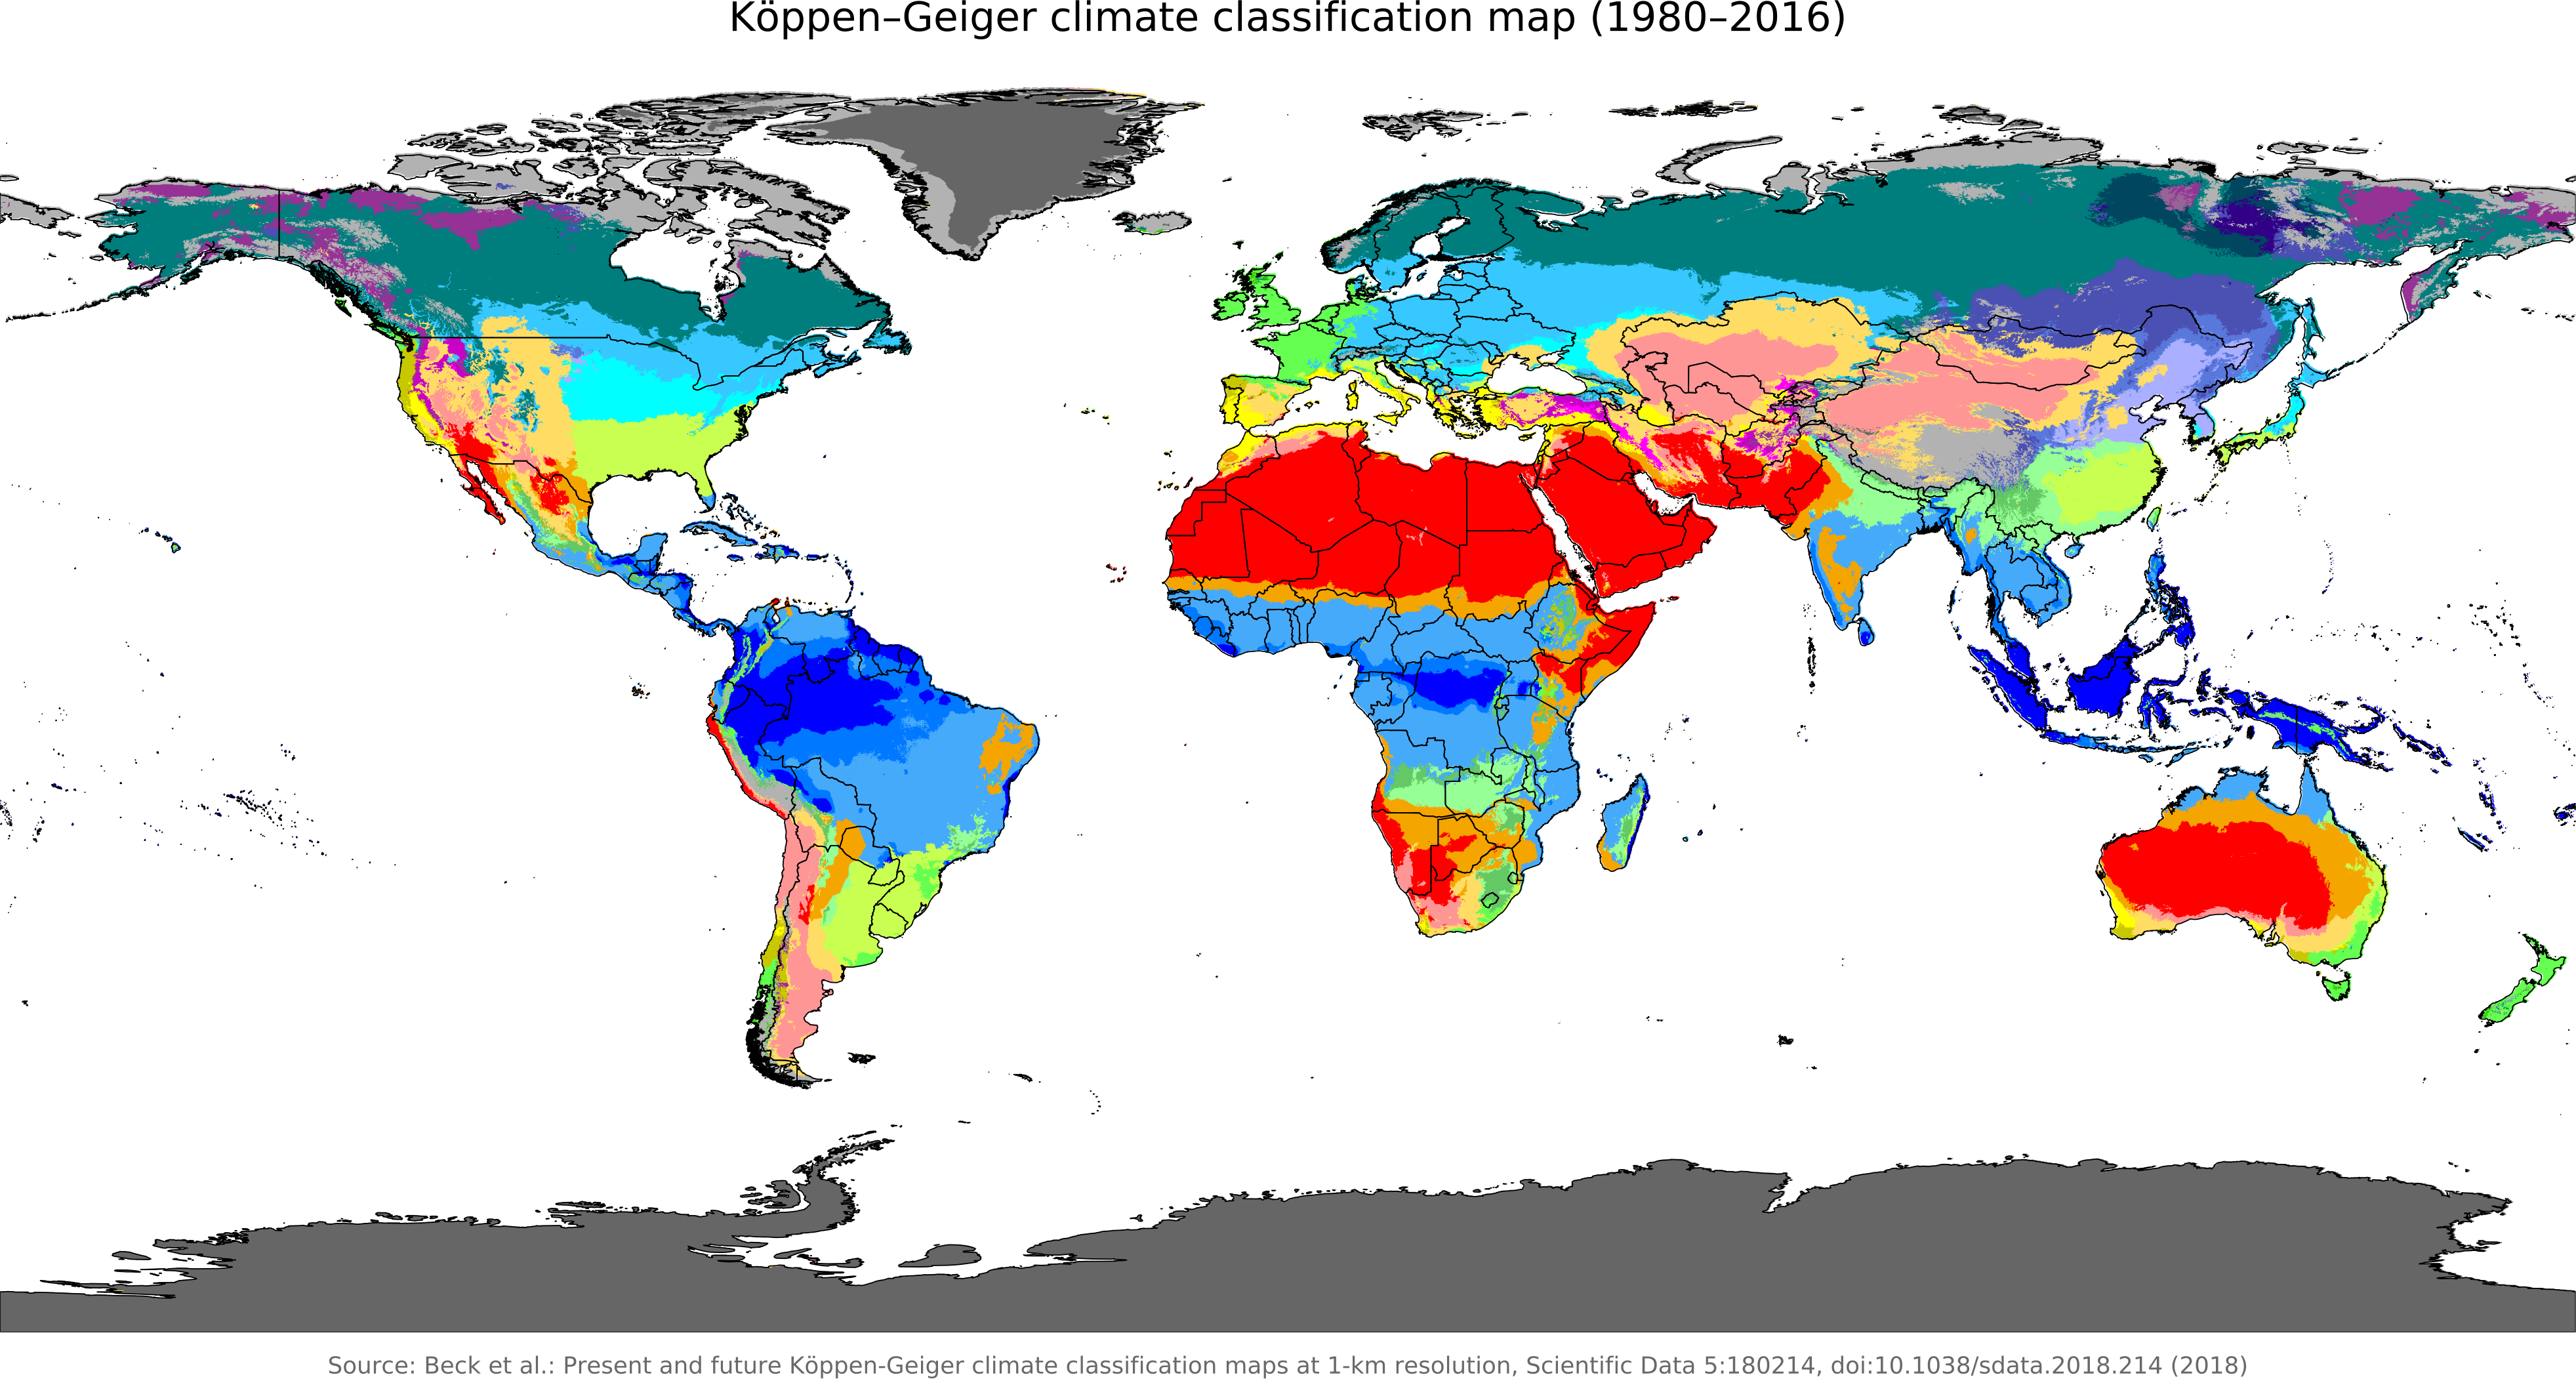 Koppen Geiger Climate Classification Map19802016